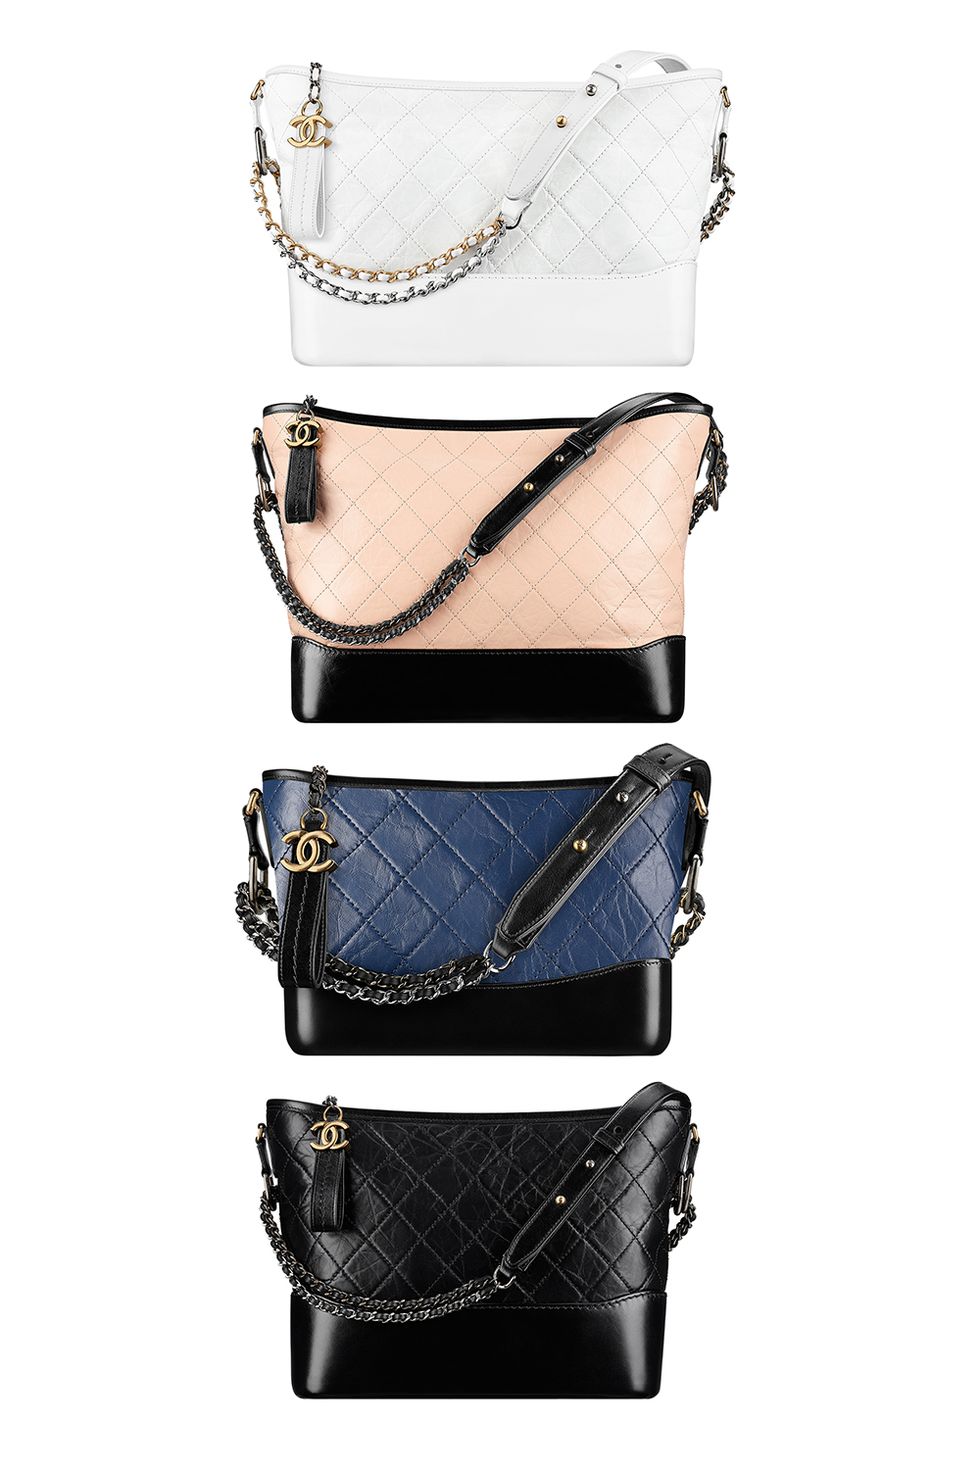 BEST CROSSBODY BAGS 2017, Louis Vuitton, Gucci, Chanel